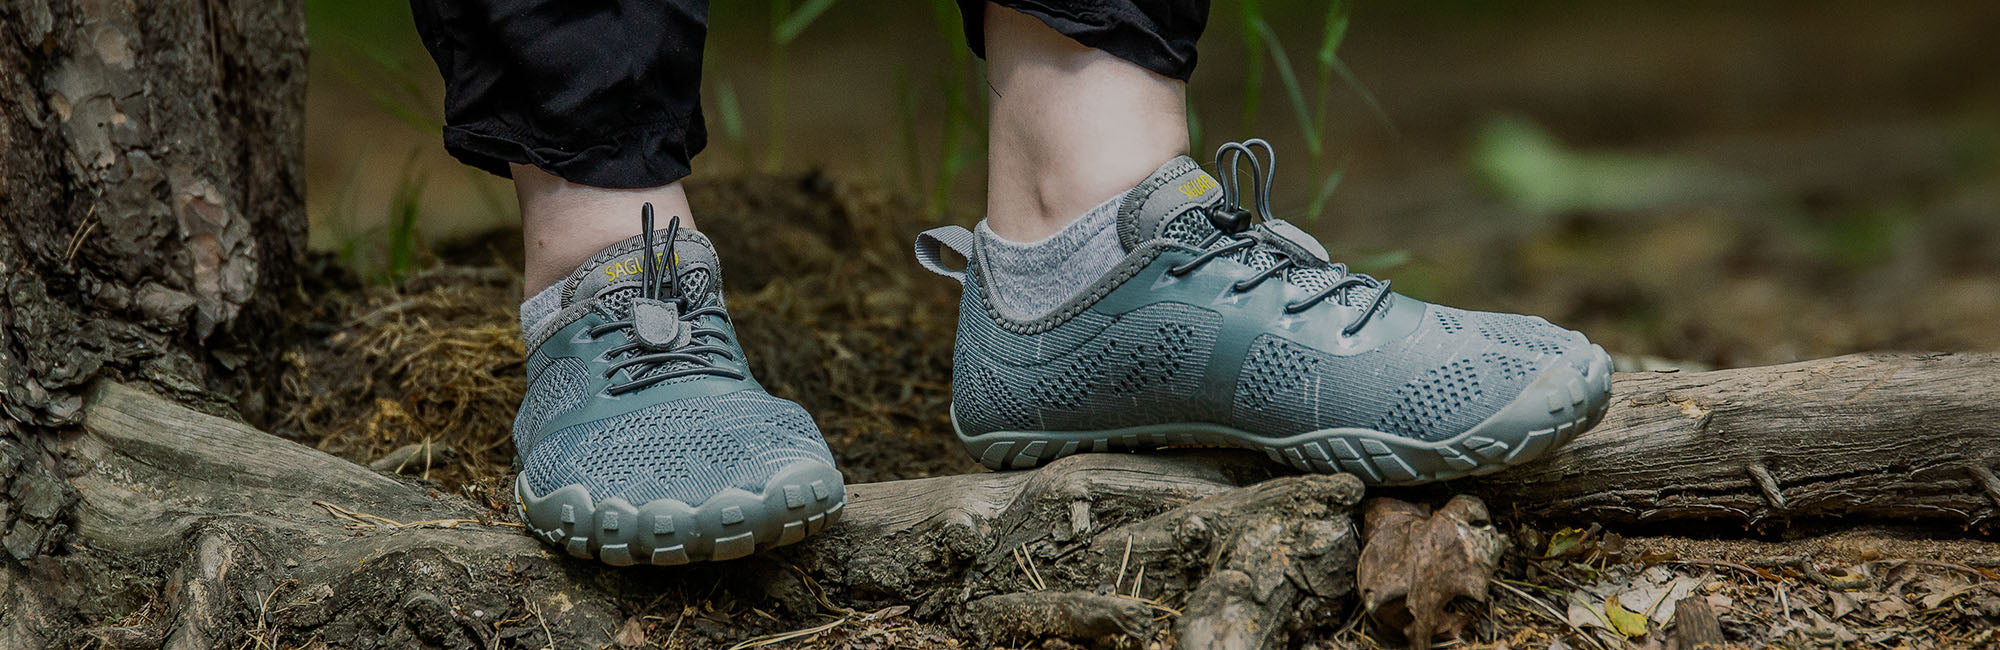 Saguaro Barefoot Shoes